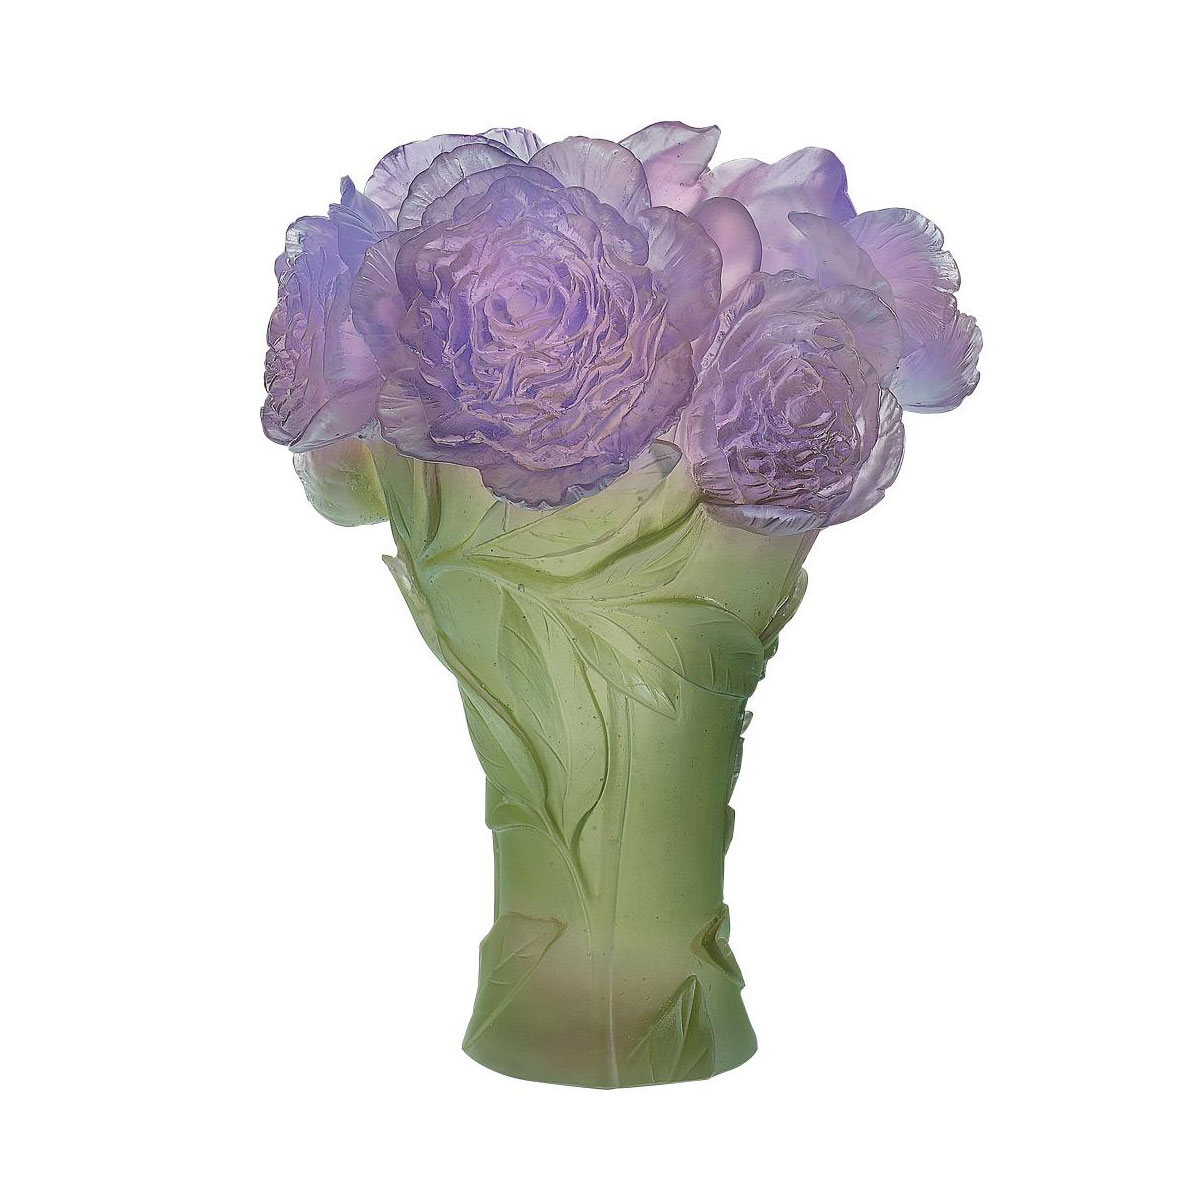 Daum 15" Peony Vase in Green and Purple